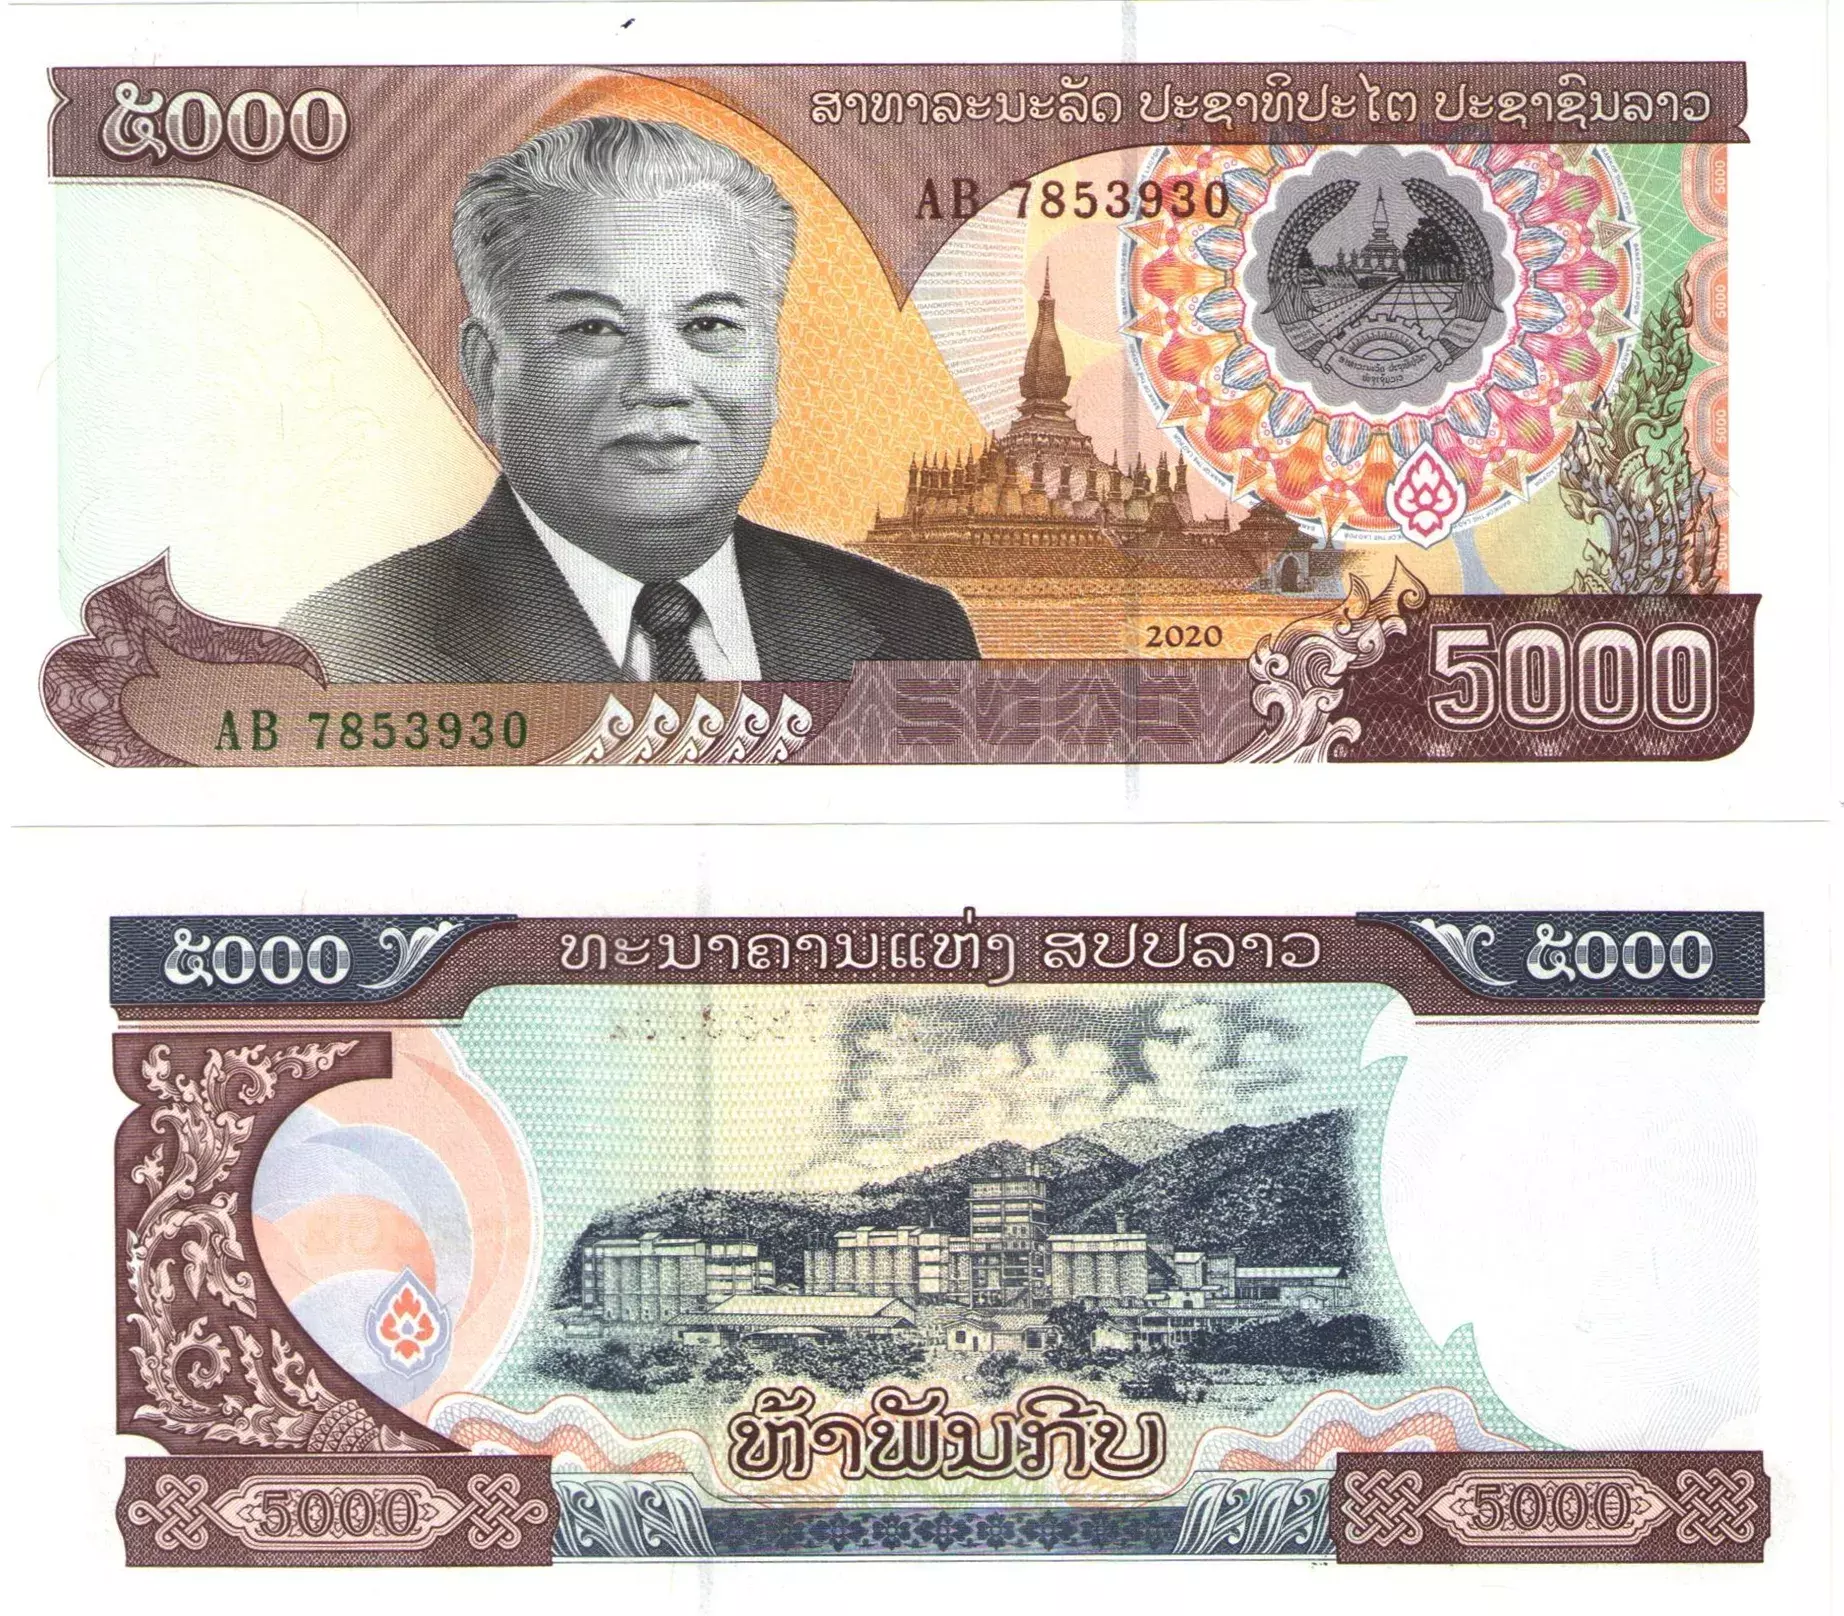 5000 казахстан. Банкнота Лаоса 2000 КИП 2003. Лаос 5000 КИП 2003 года.